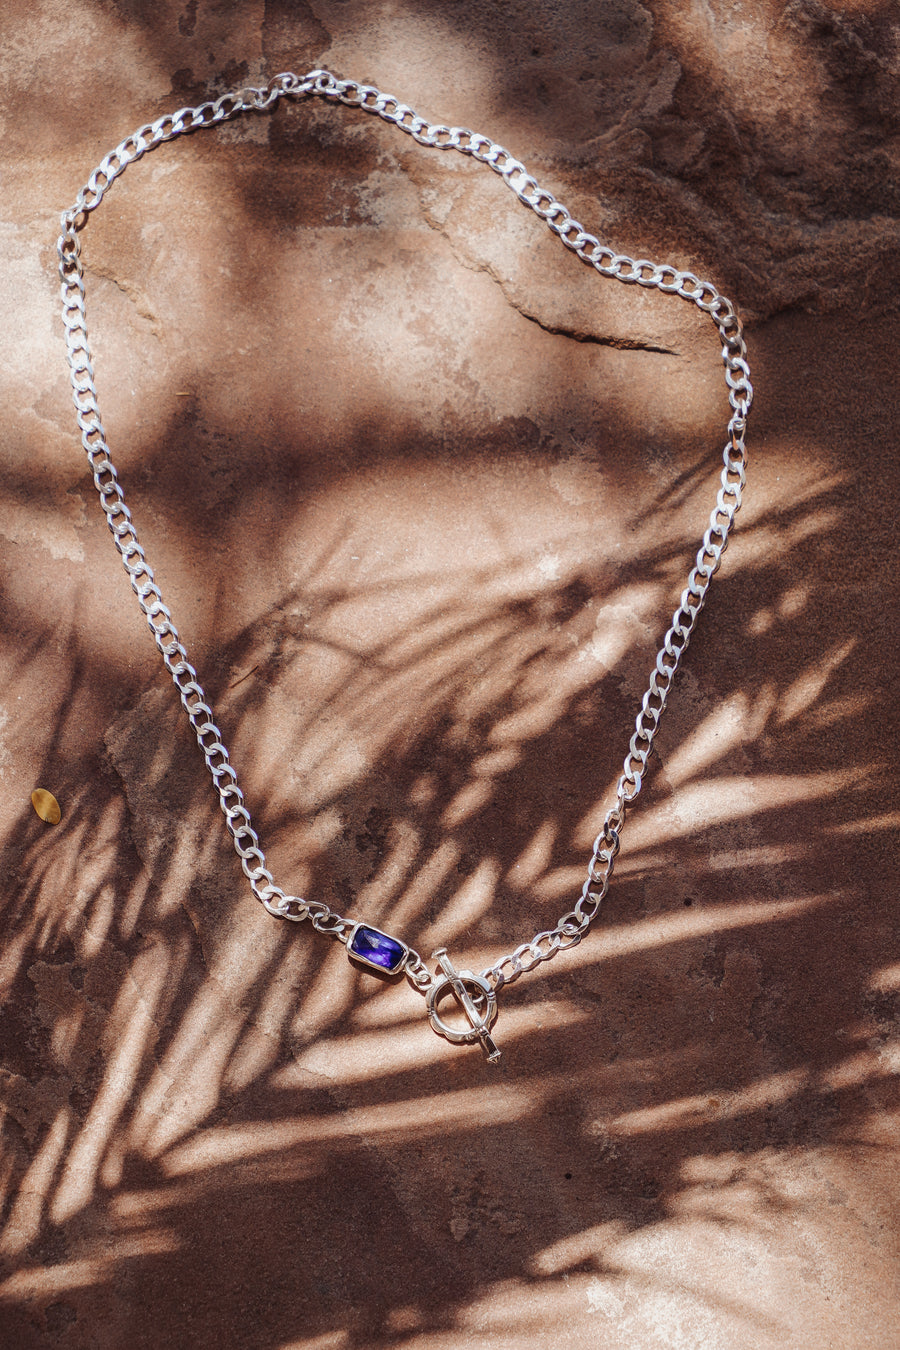 Blue Kyanite Necklace